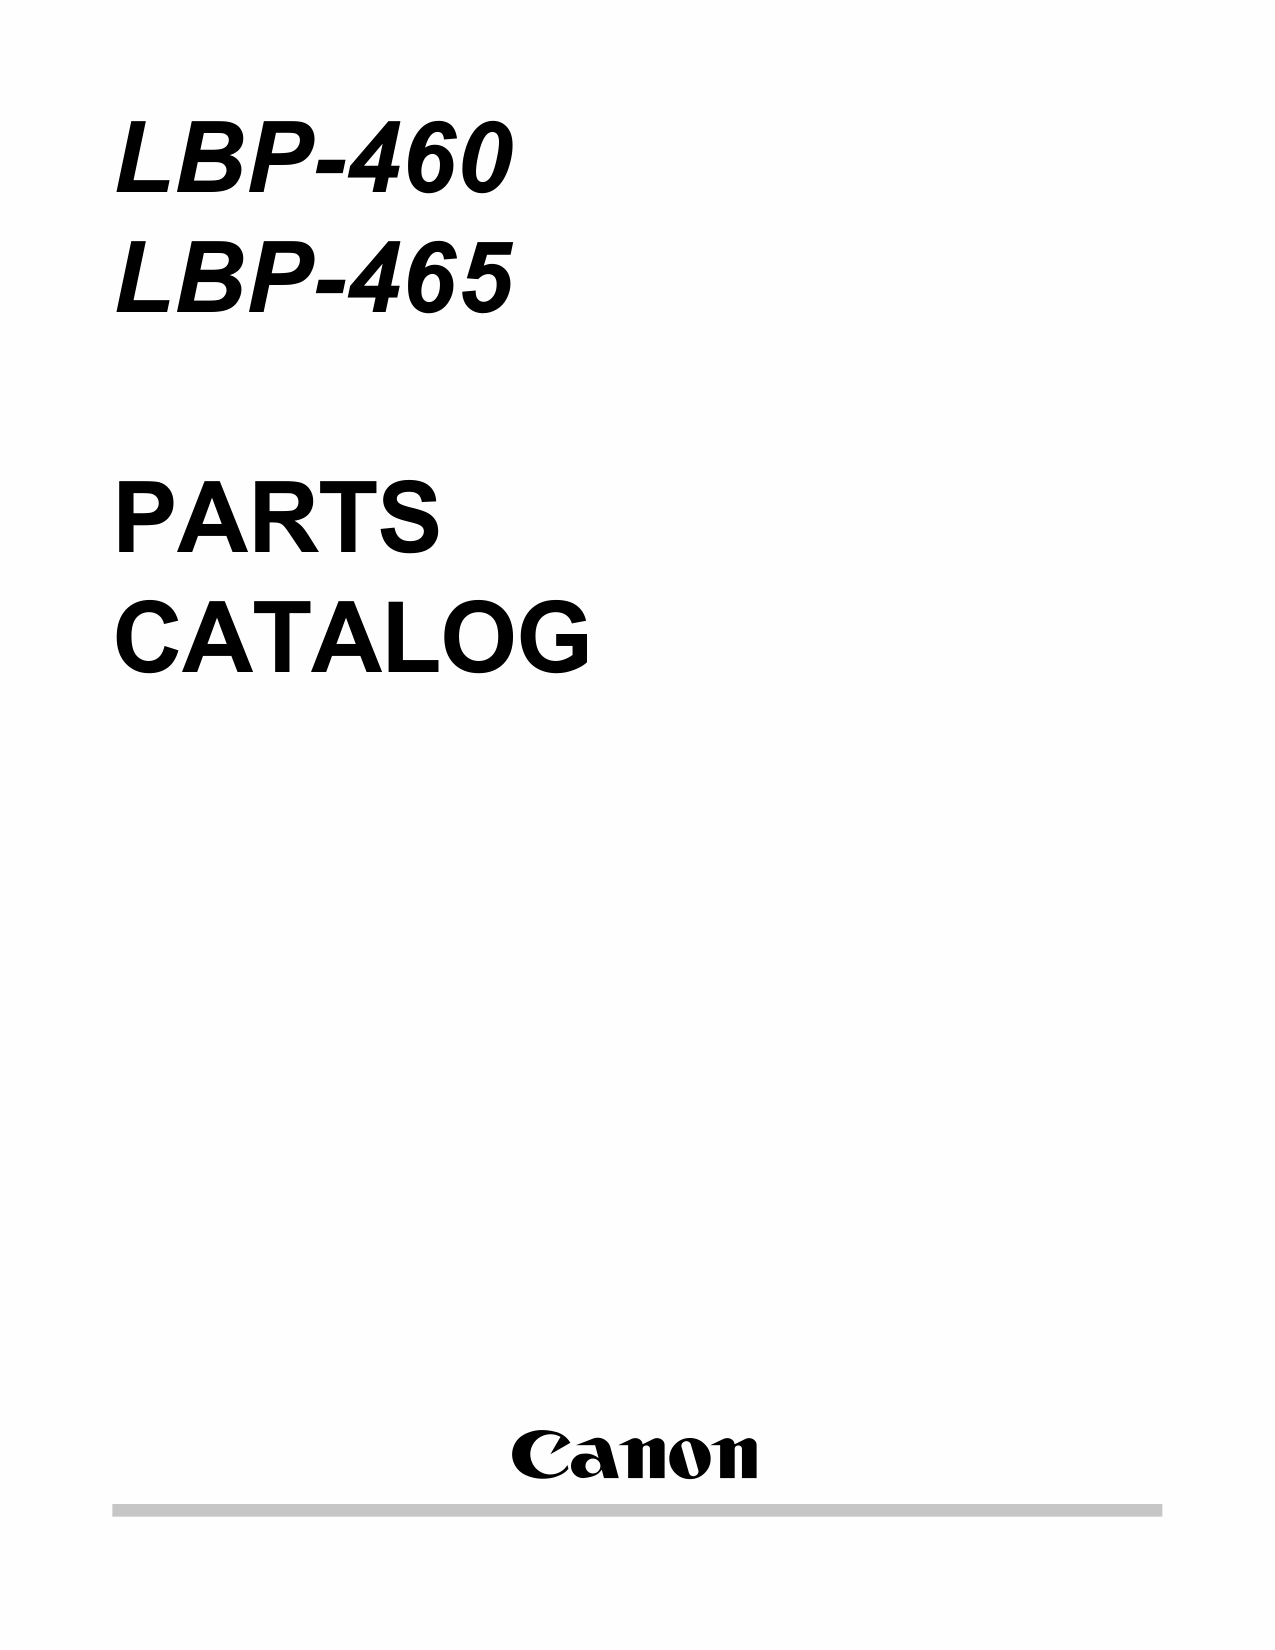 Canon imageCLASS LBP-460 465 Parts Catalog Manual-1